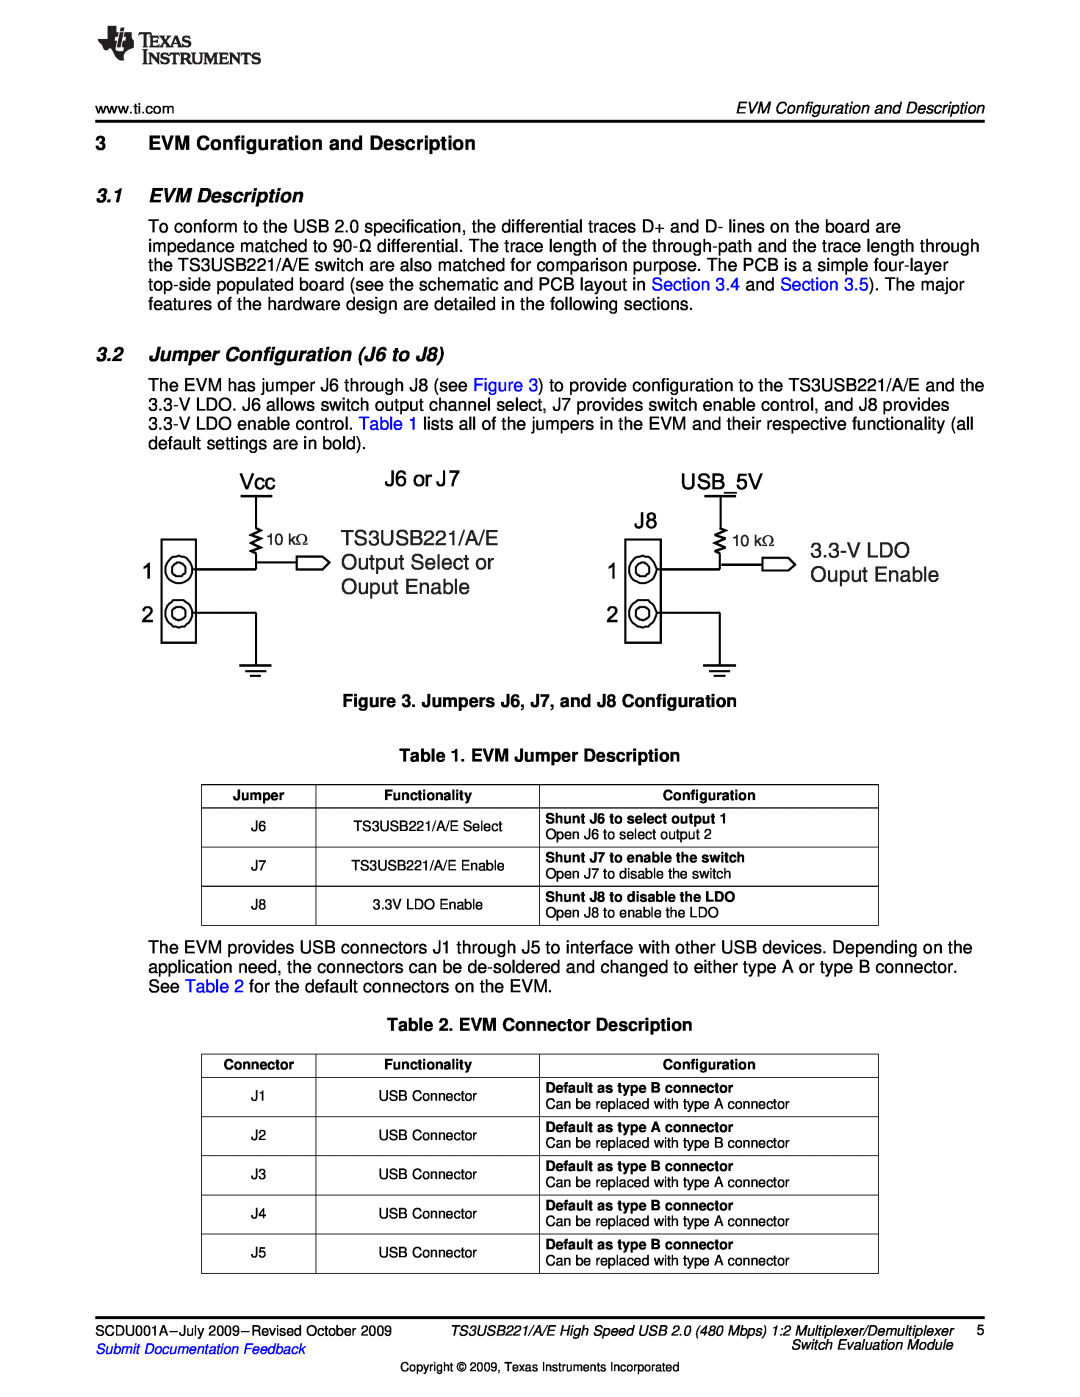 Texas Instruments TS3USB221 EVM Configuration and Description, EVM Description, Jumper Configuration J6 to J8, V Ldo 